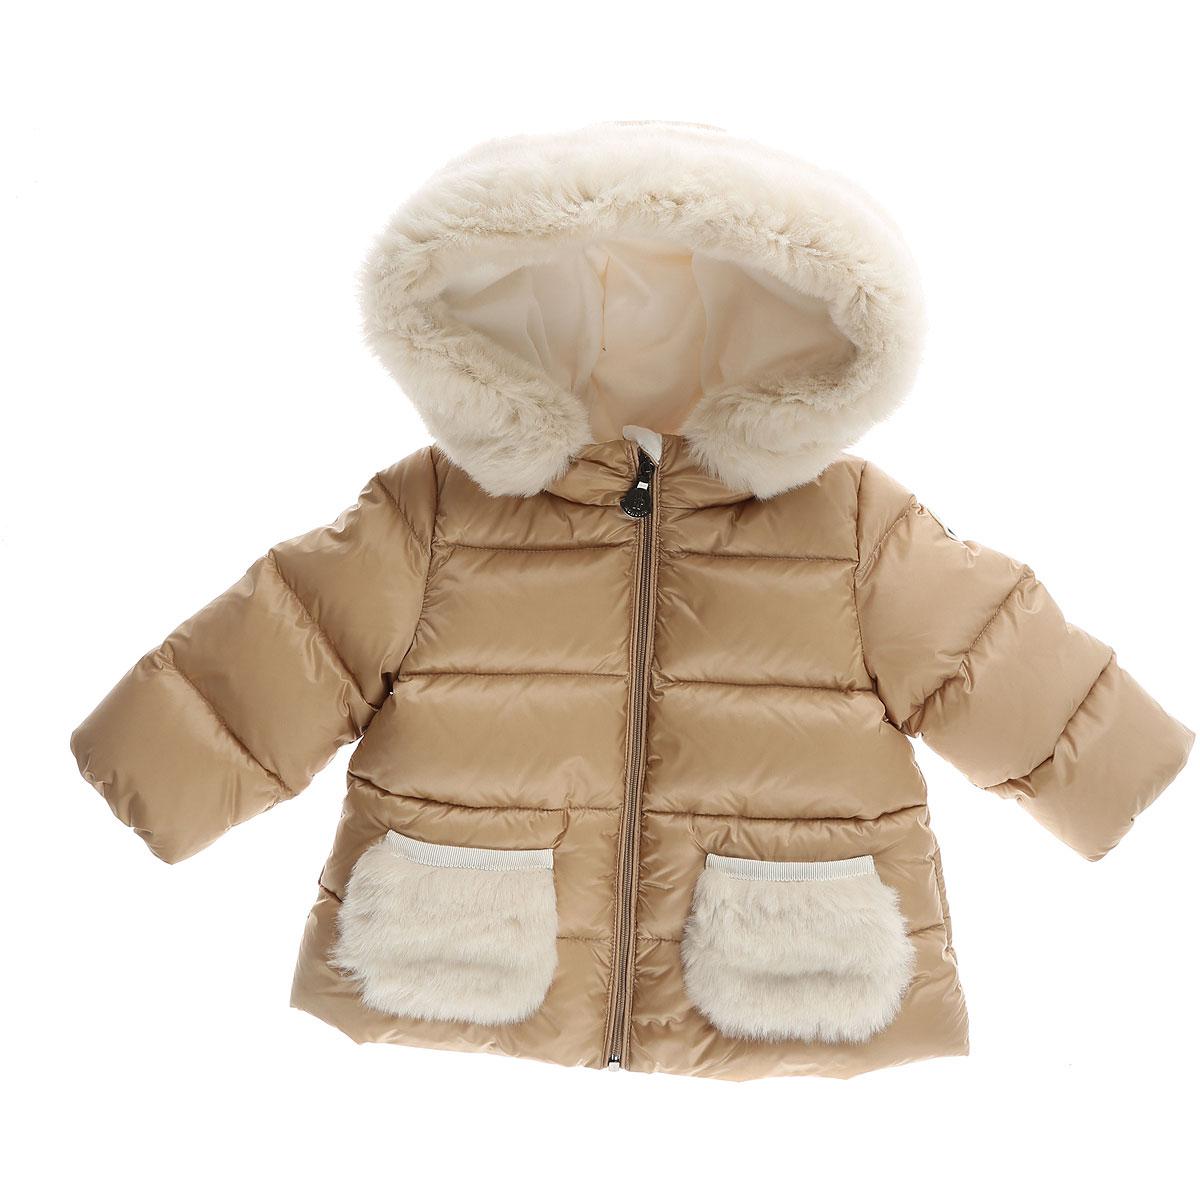 Moncler Fur Baby Sets For Girls On Sale 